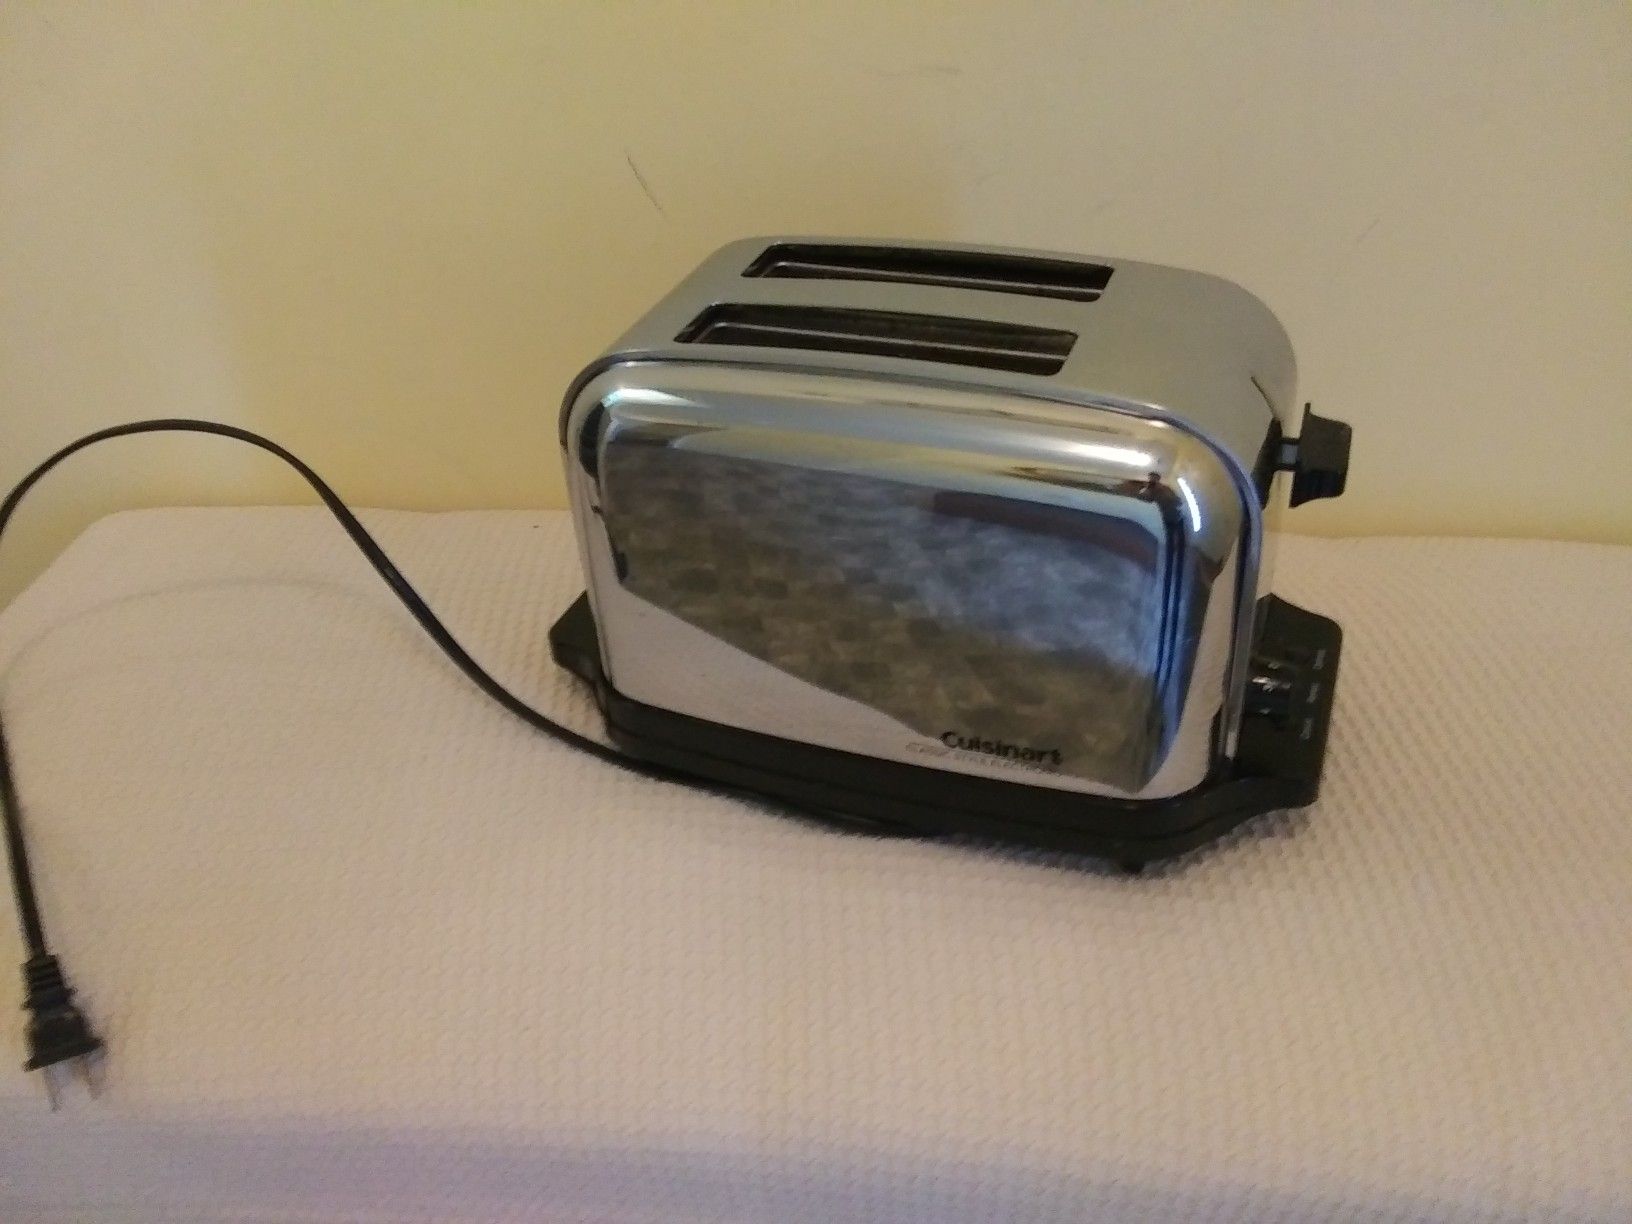 Cuisinart Chrome Toaster